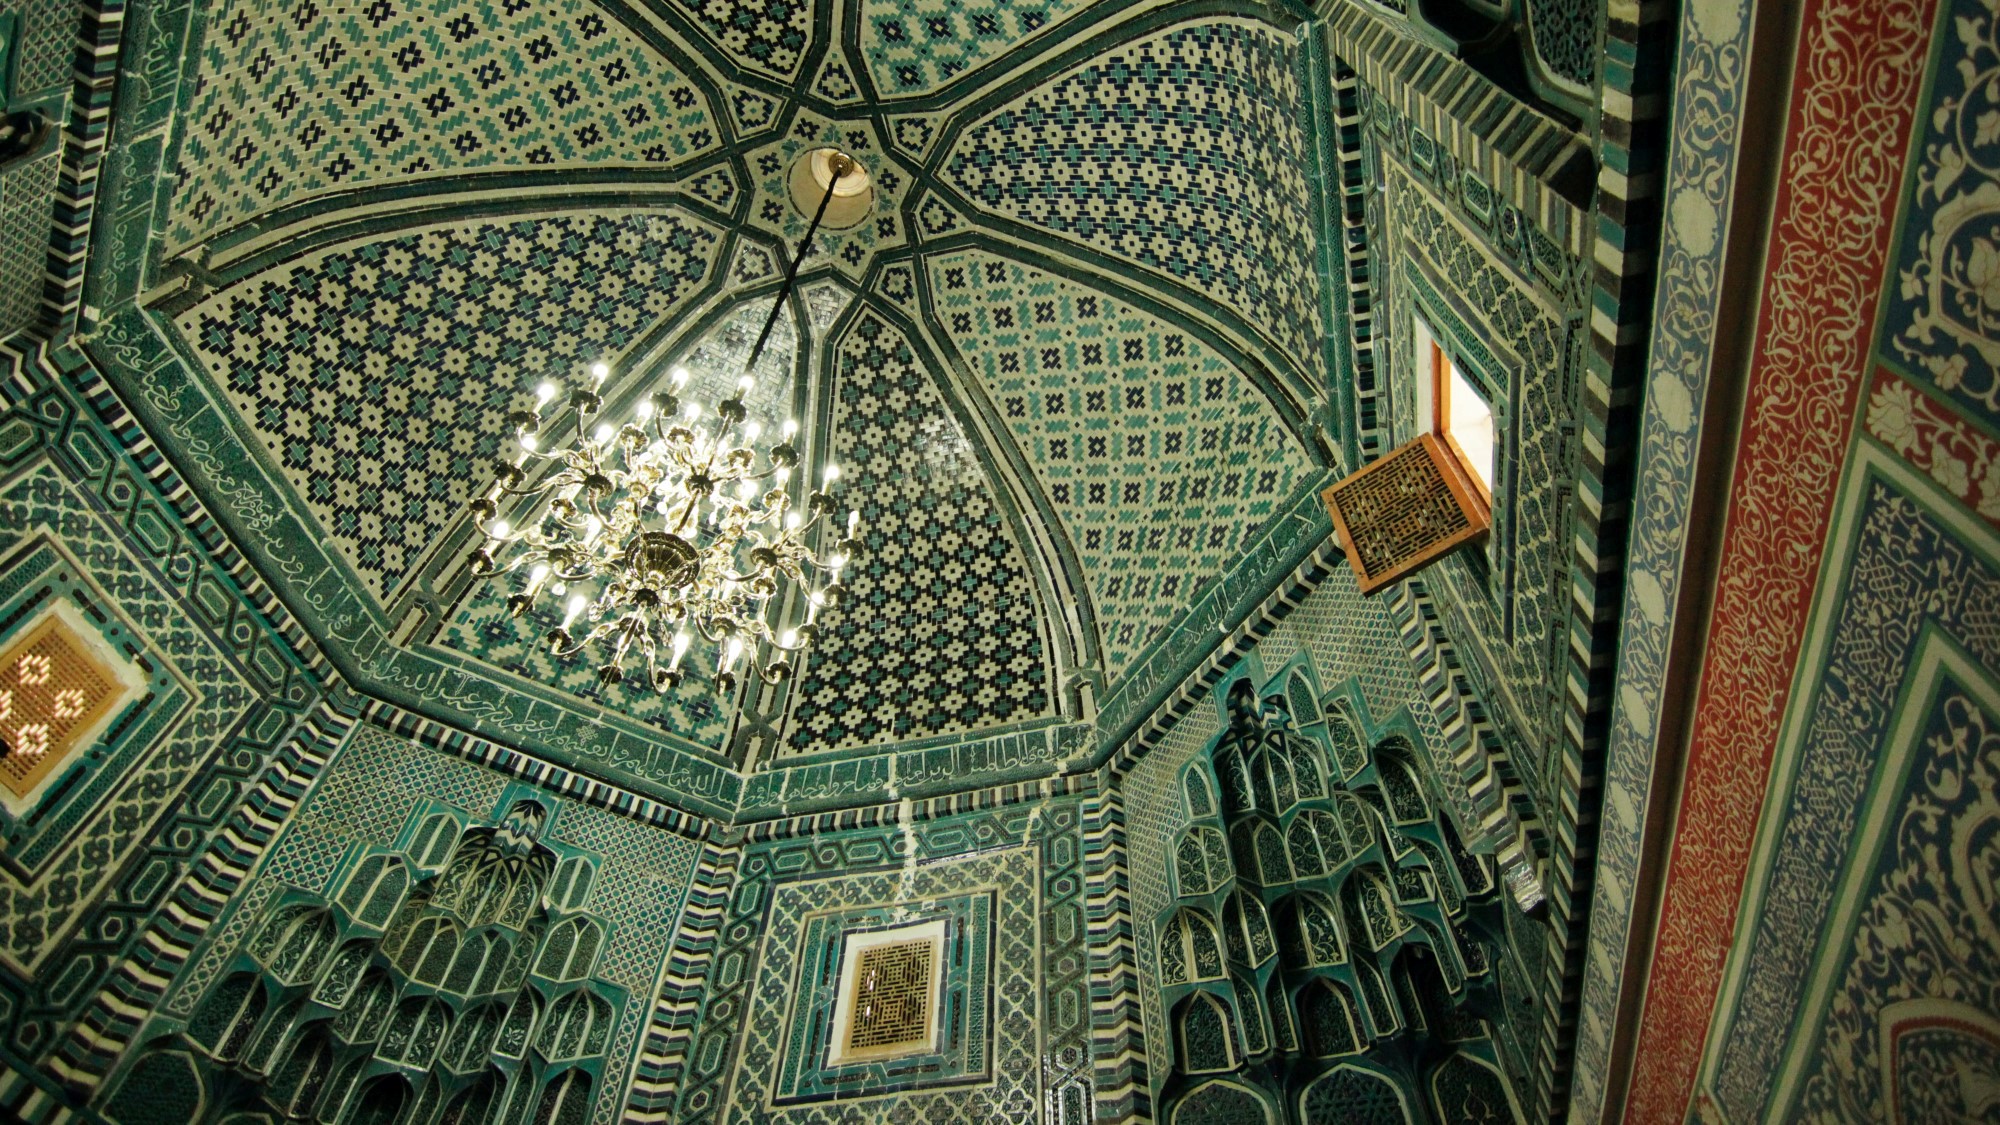 Flislagt grønt tak i moské